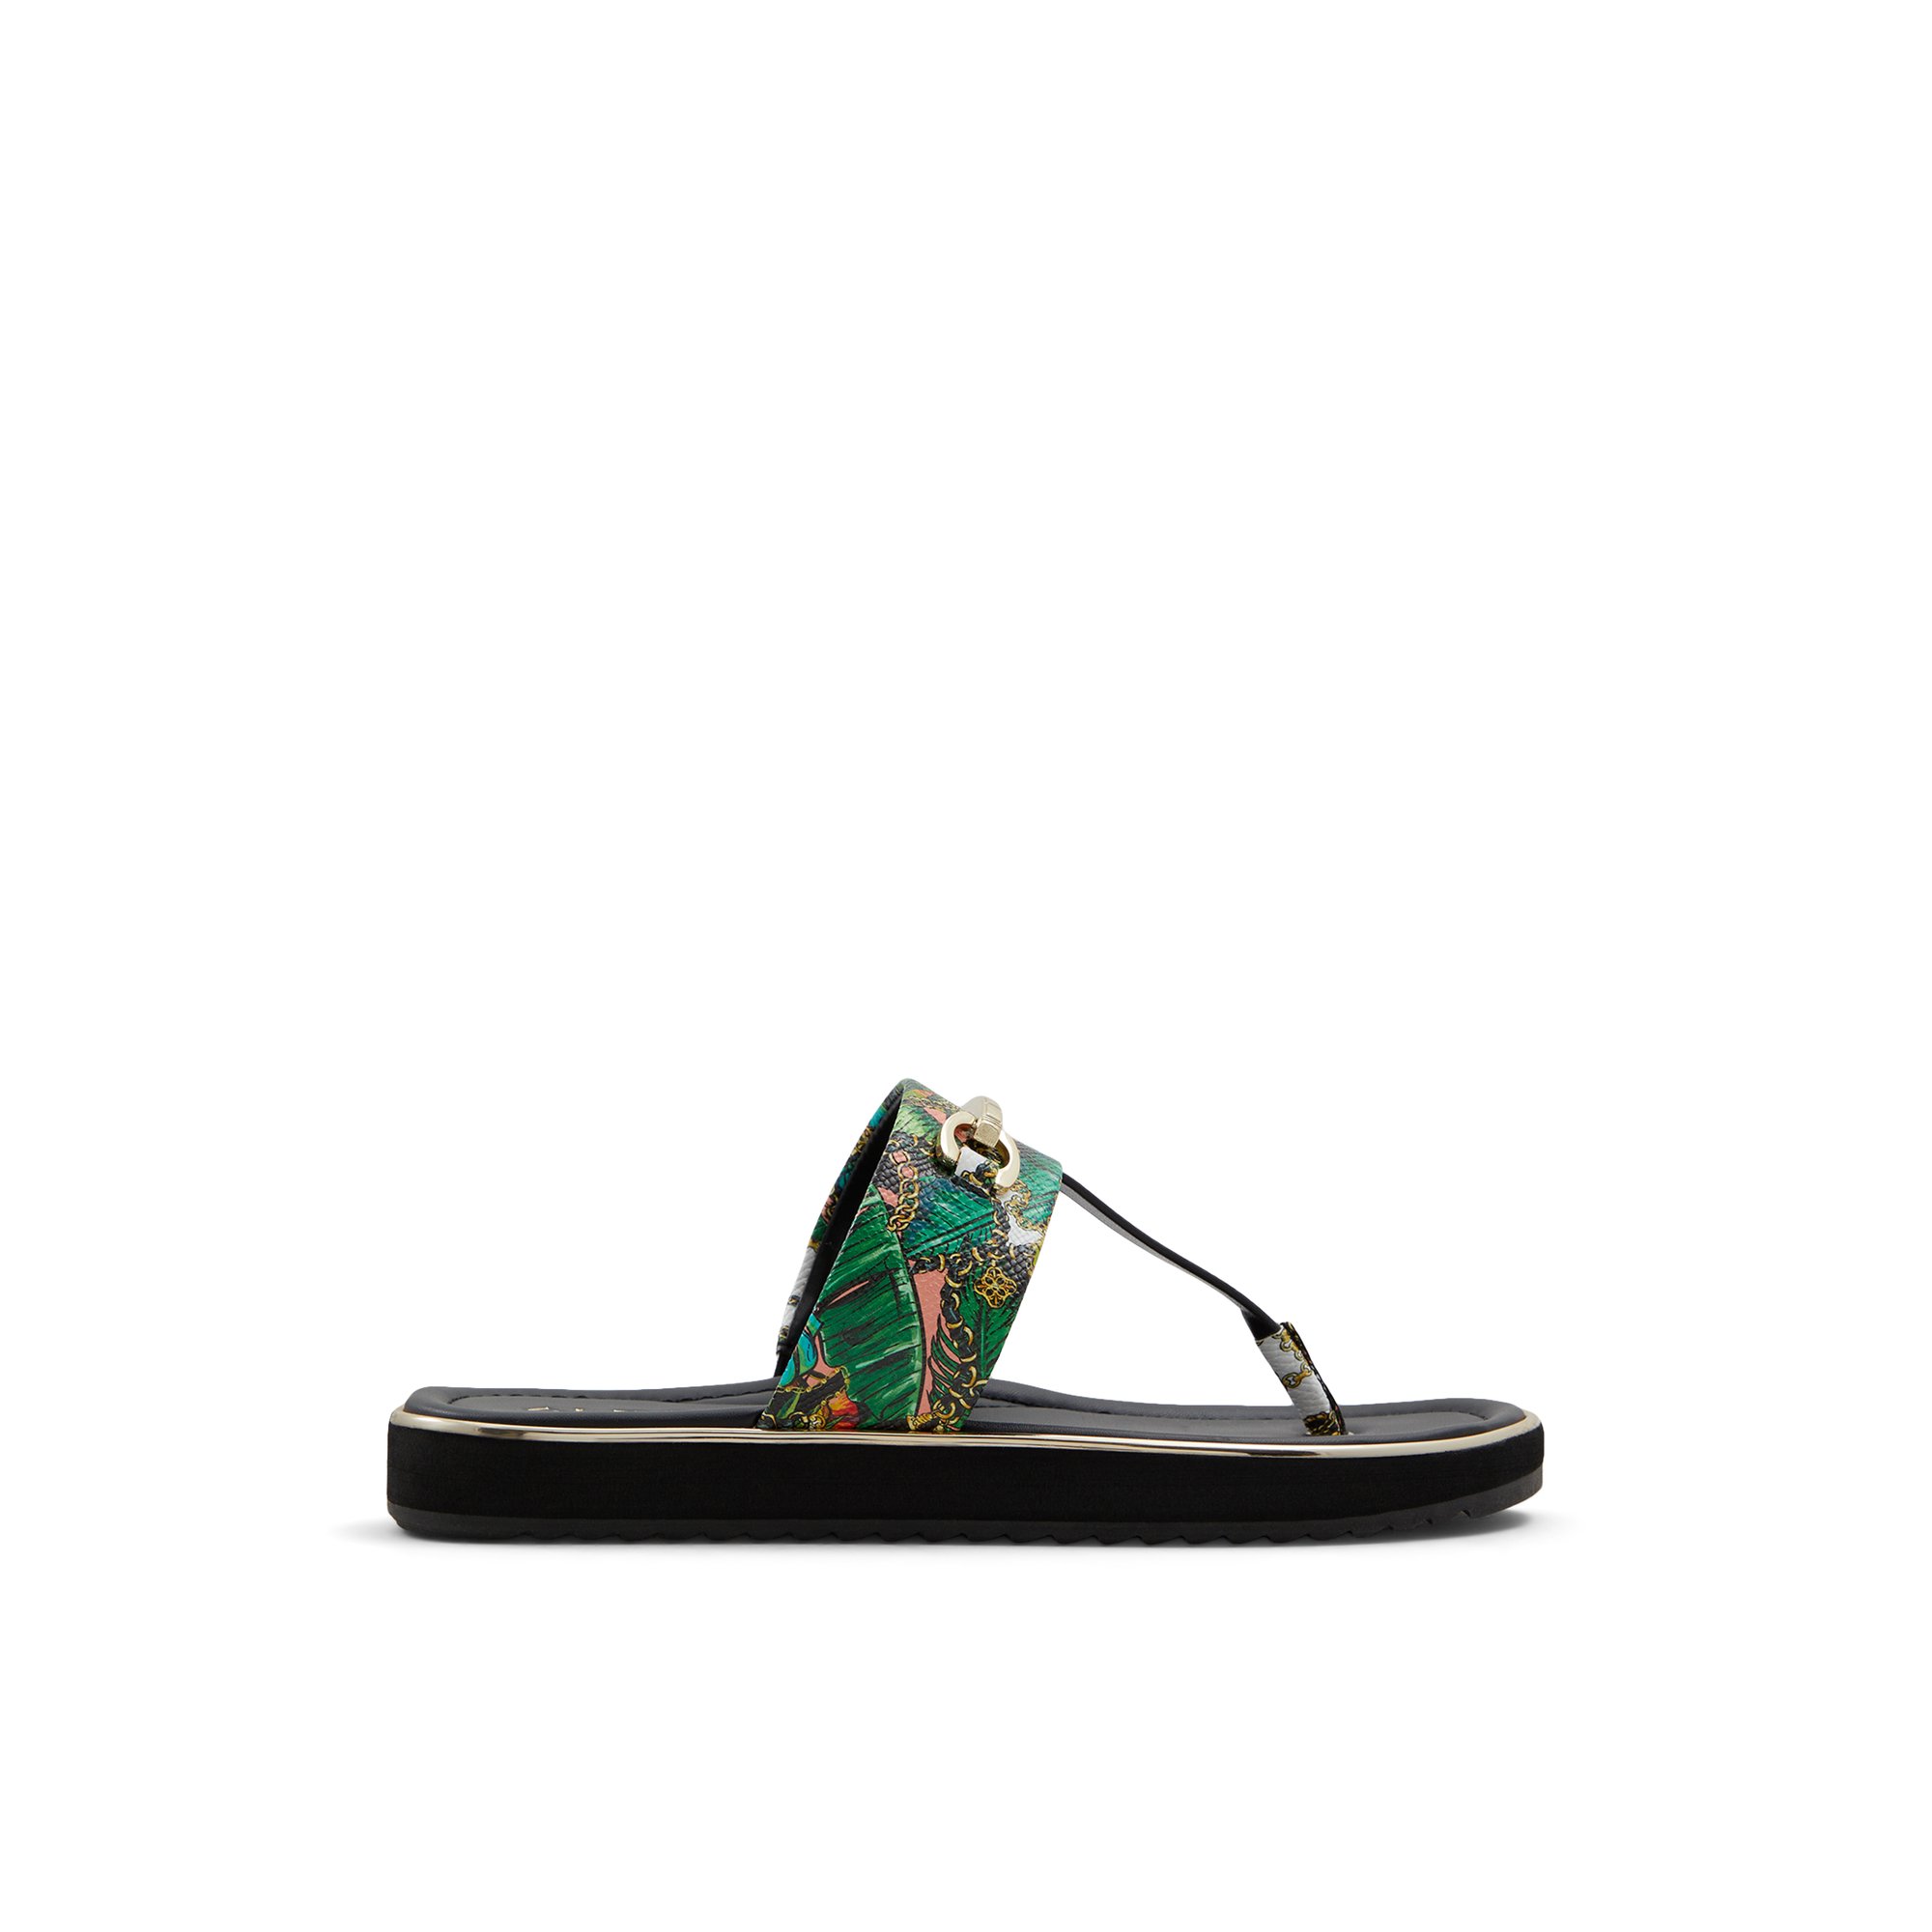 ALDO Deverena - Women's Flat Sandals - Multicolor Print